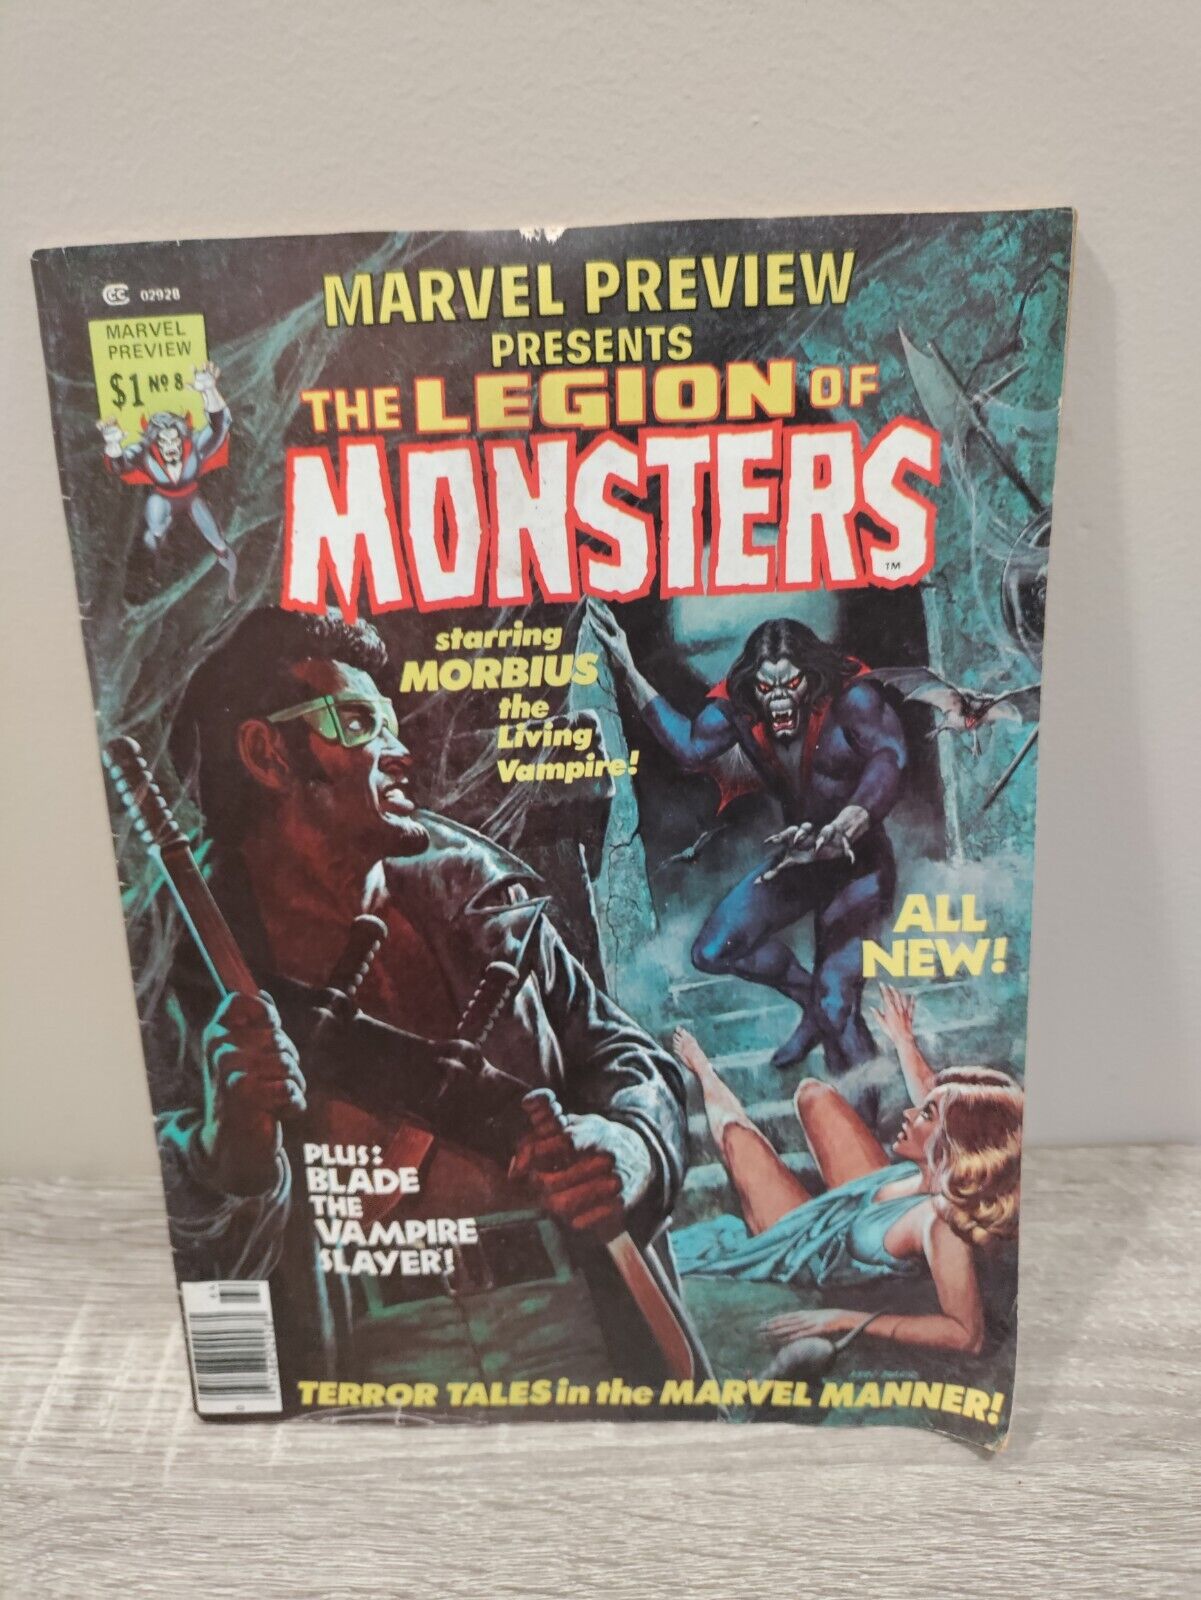 Blade,Morbius, Marvel PREVIEW #8: THE LEGION OF MONSTERS  1976  original